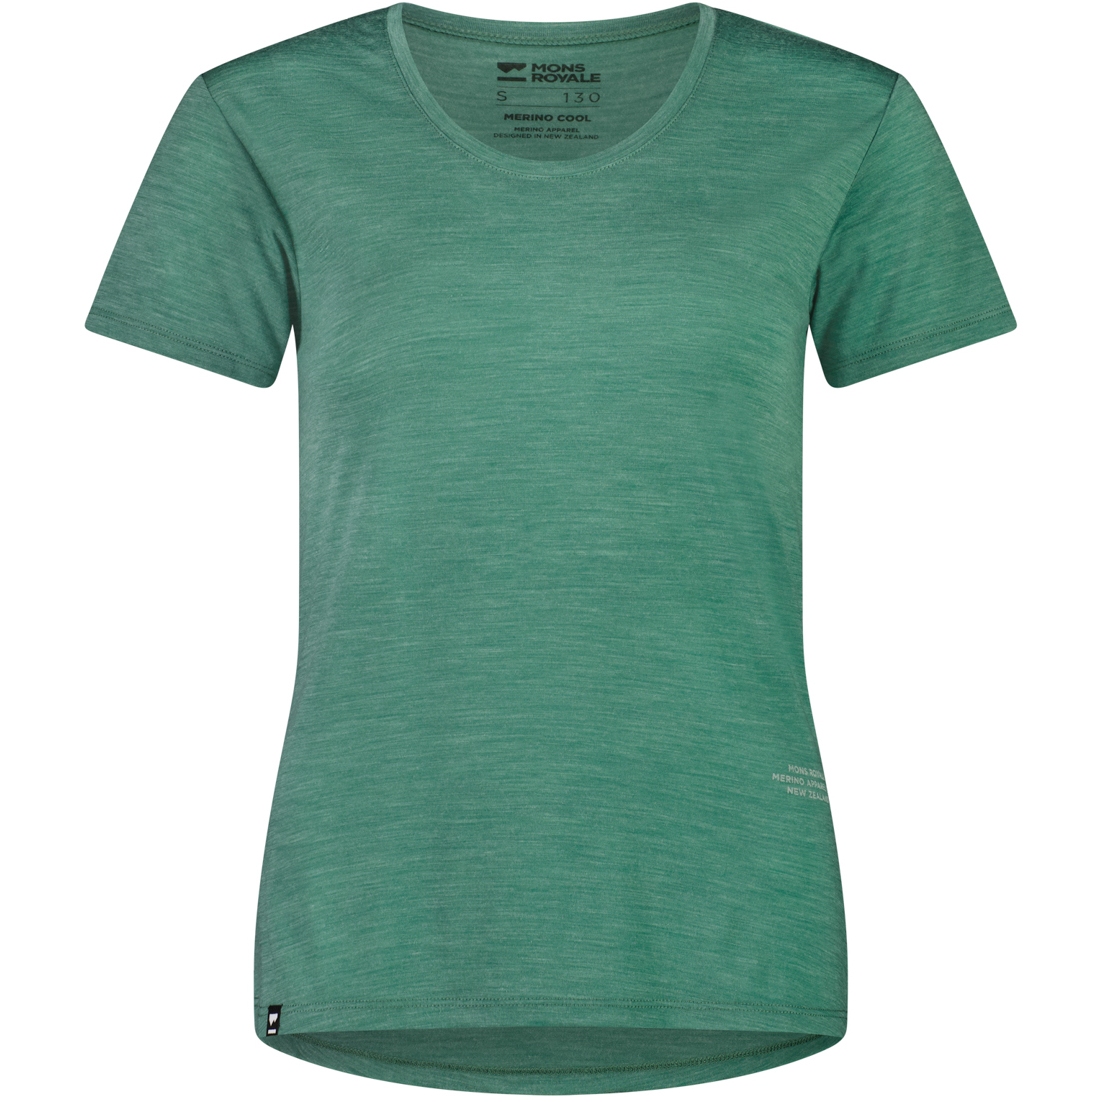 Produktbild von Mons Royale Zephyr Merino Cool T-Shirt Damen - smokey green